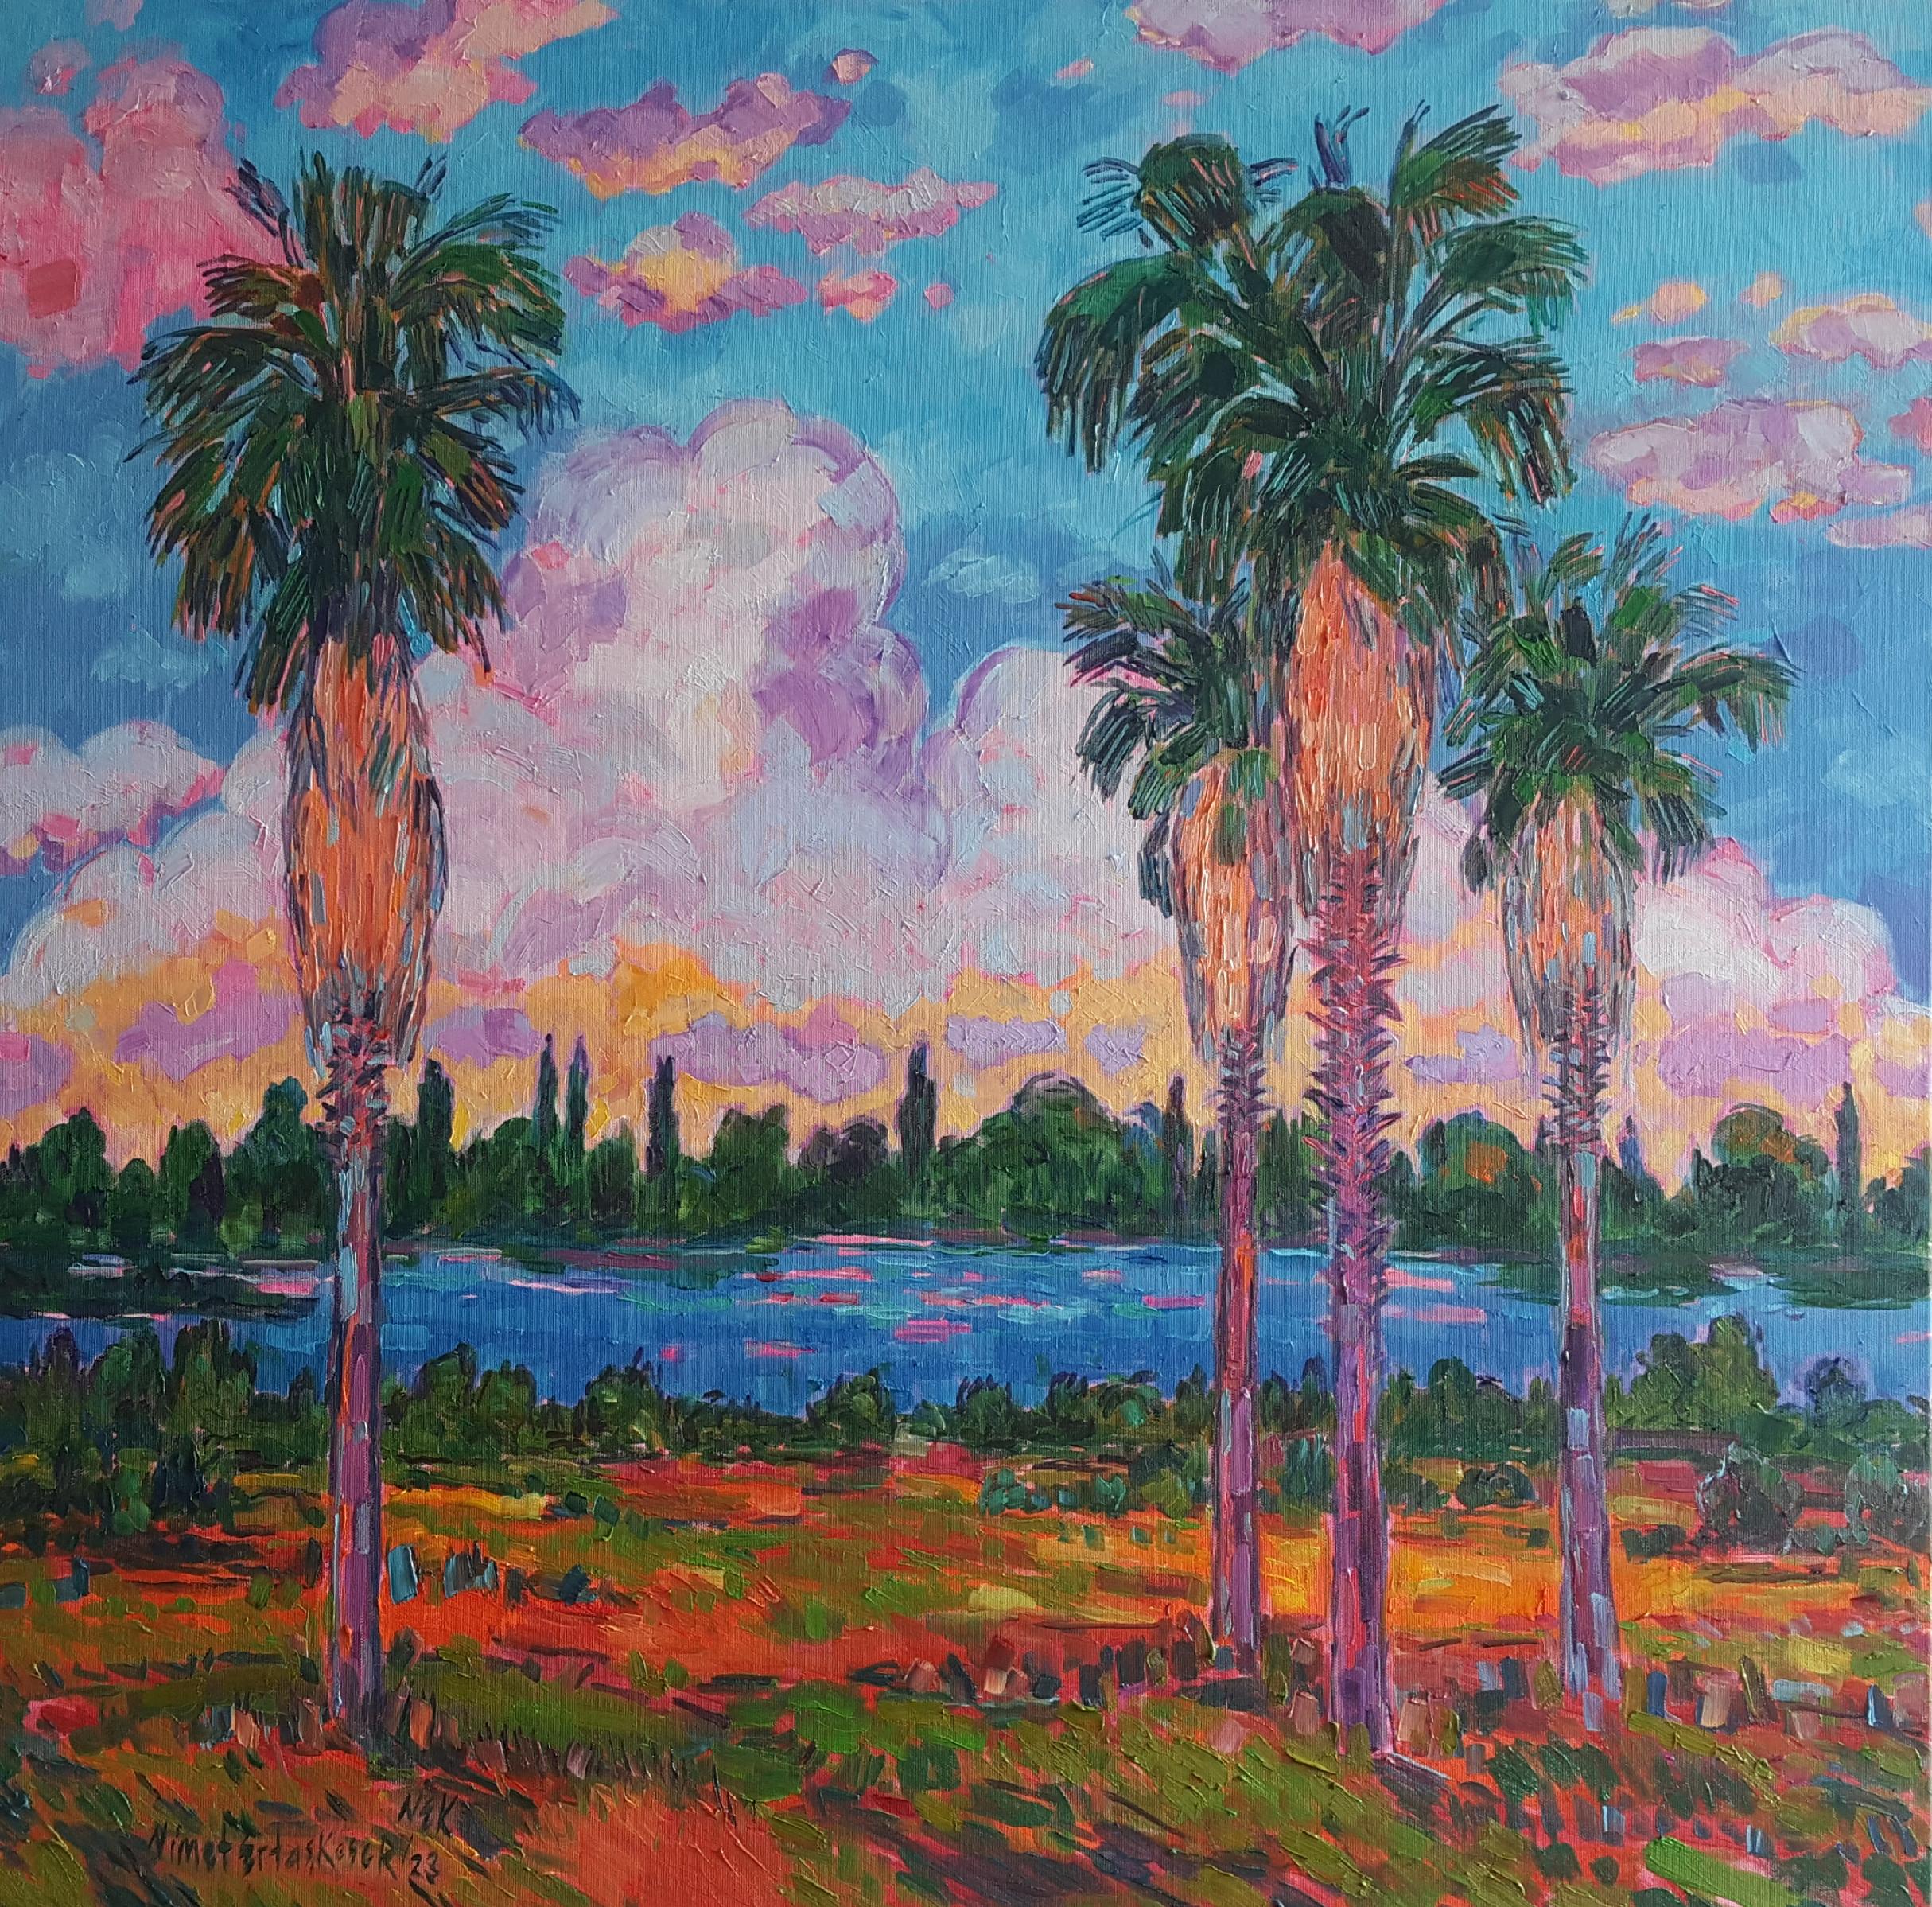 Nimet Keser Landscape Painting - Palm trees by the River side & Sunset-original impressionism landscape painting